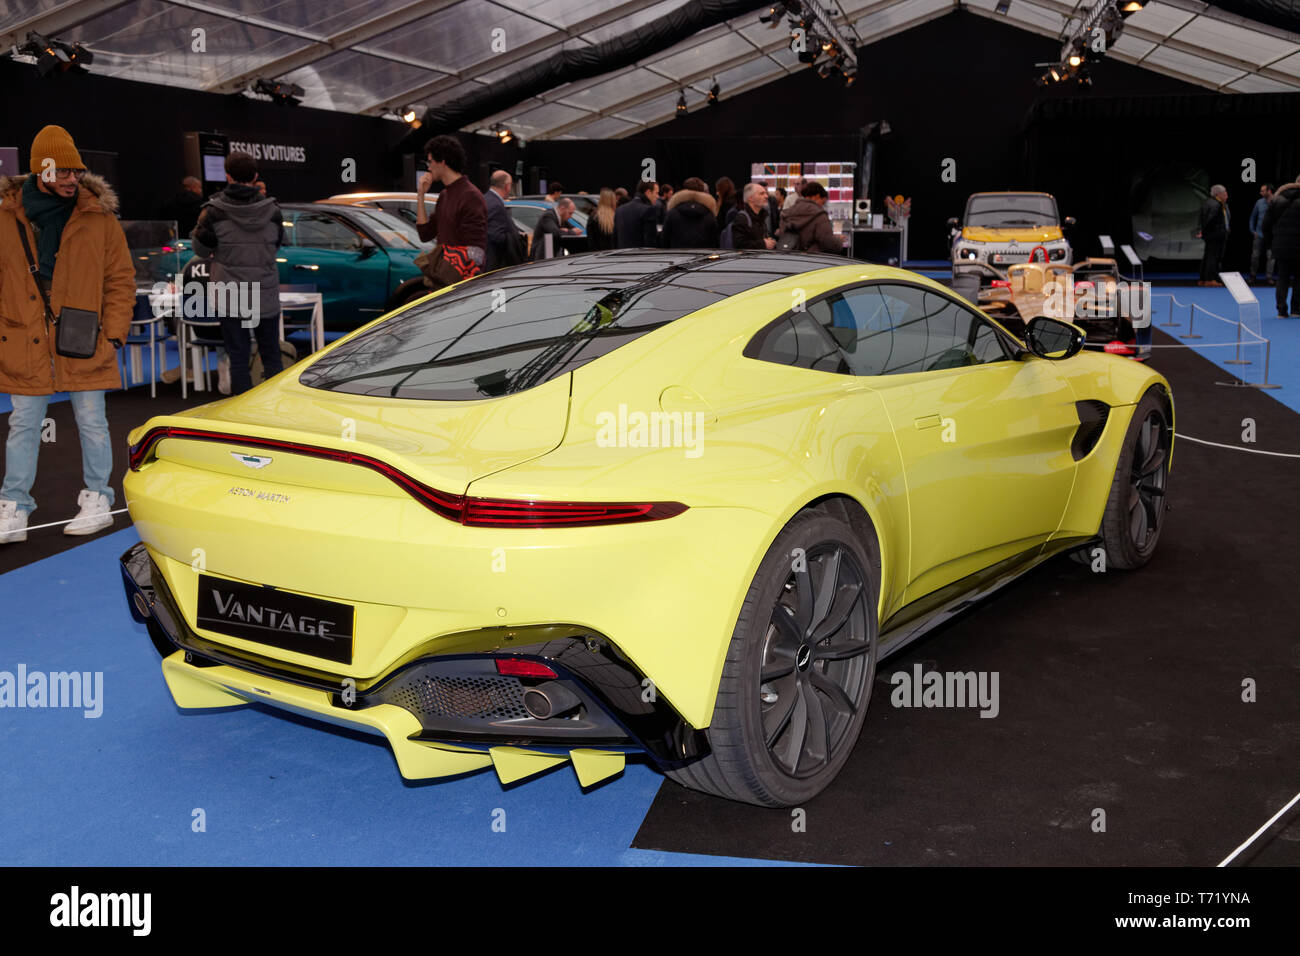 Aston Martin Vantage at the 34th International Automobile Festival , 2019.Credit:Veronique Phitoussi/Alamy Stock Photo Stock Photo